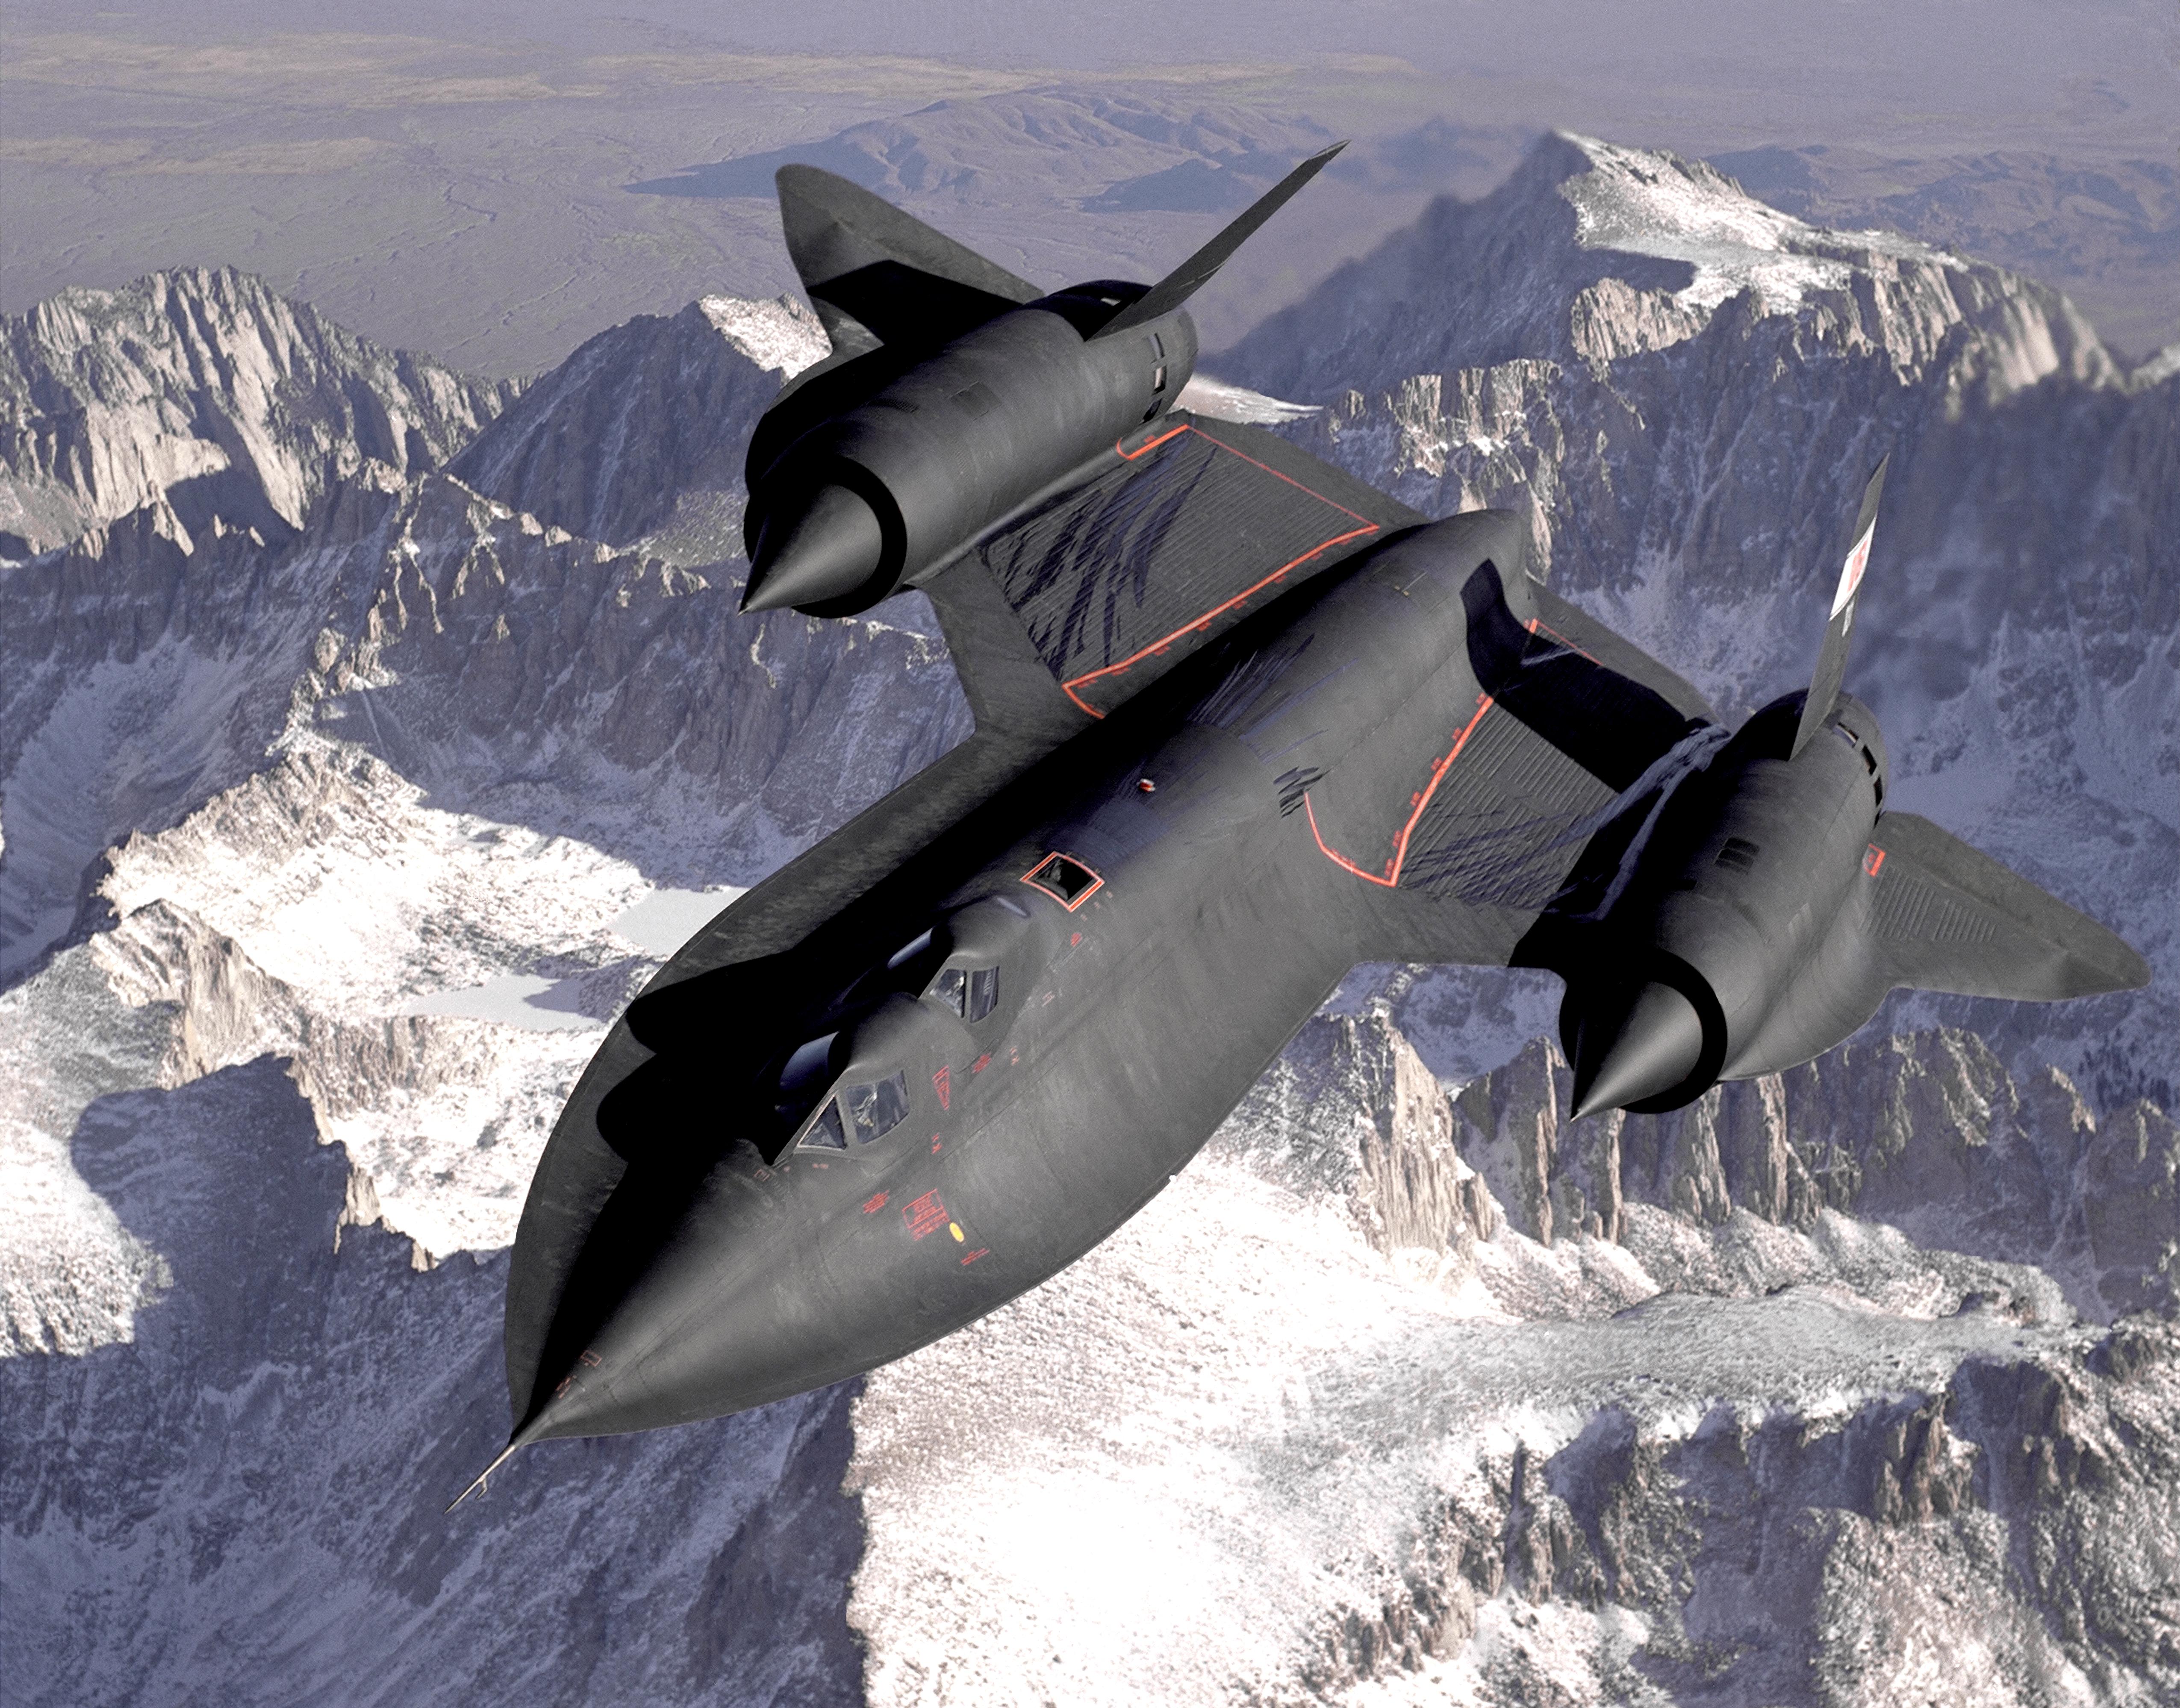 Amazing Lockheed SR-71 Blackbird Pictures & Backgrounds